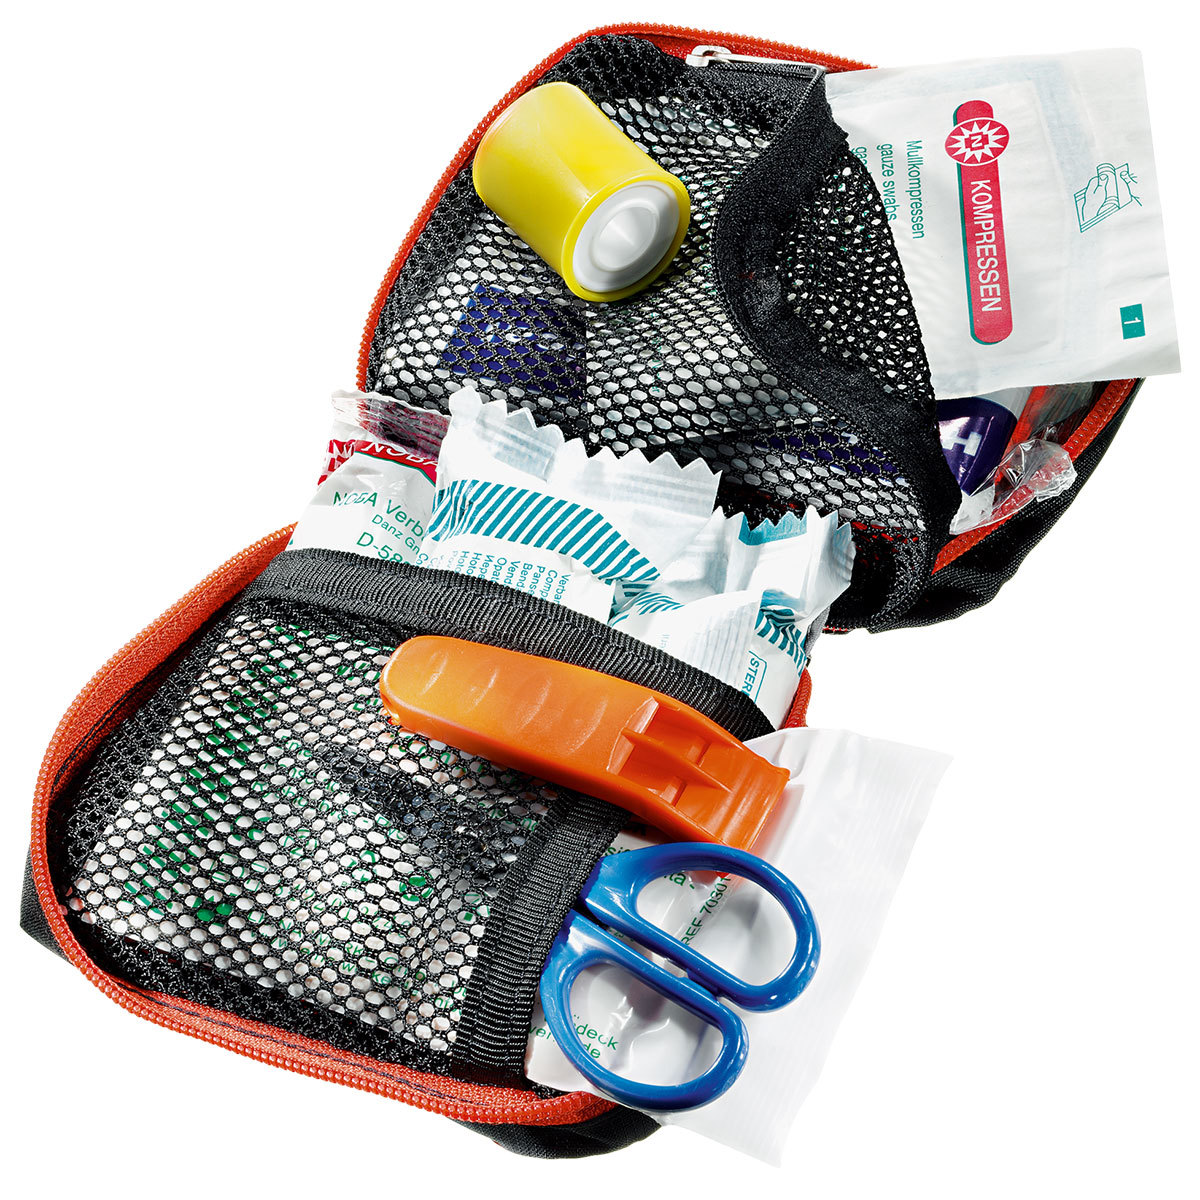 Deuter First Aid Kit Active Oranje